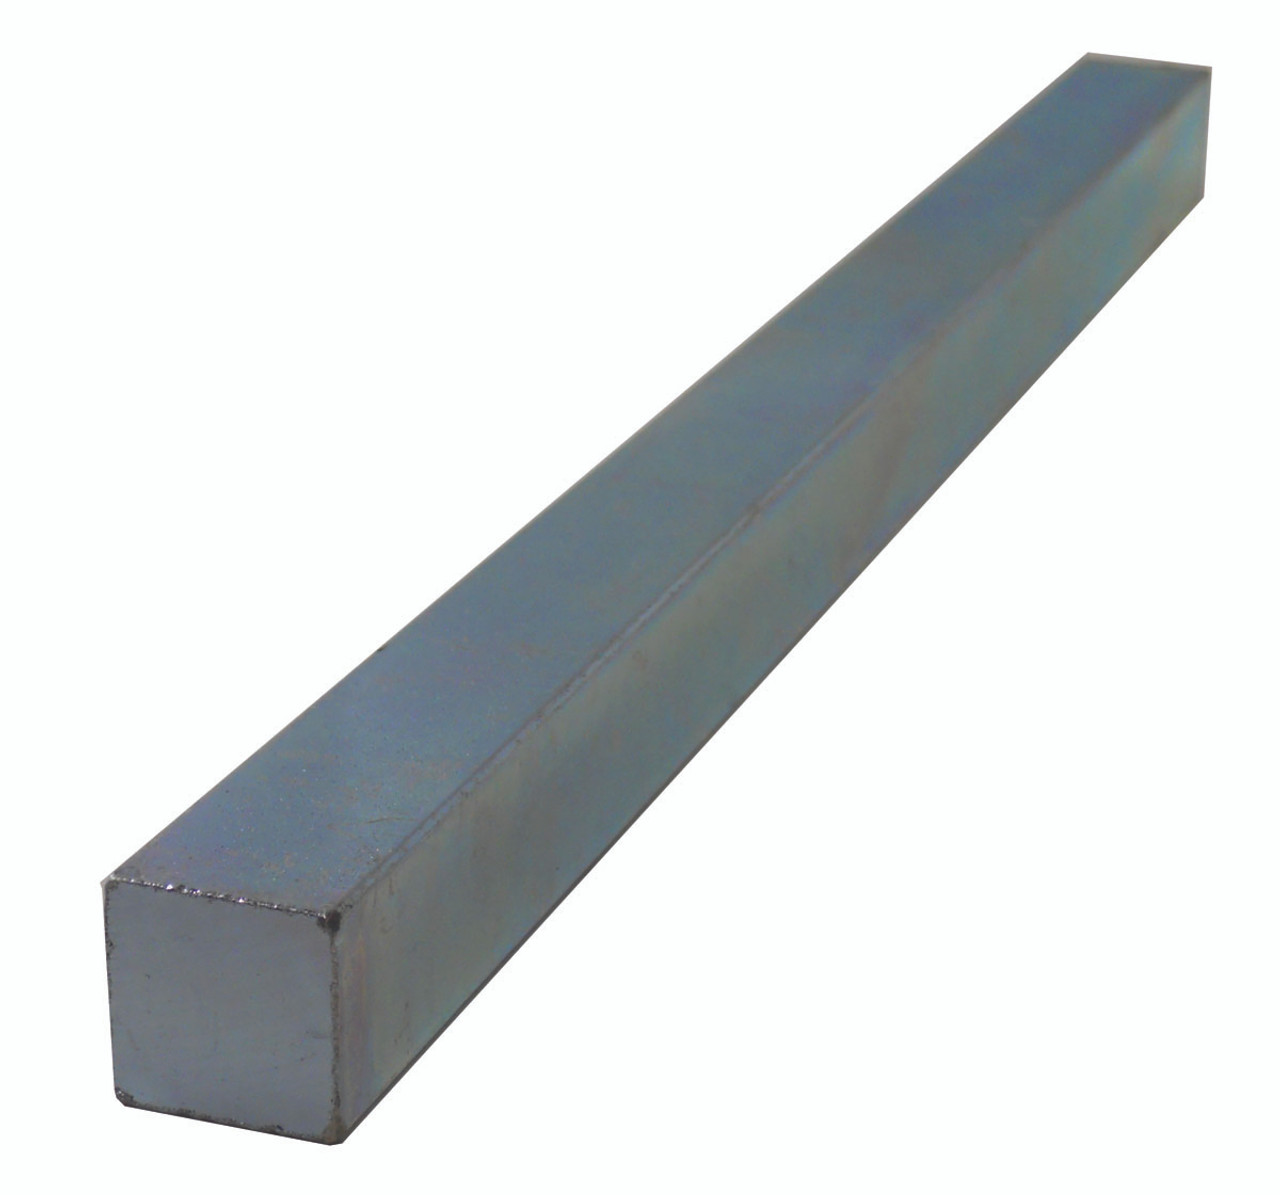 Square SAE 1/4 x 12" Zinc Plated Steel Keystock  .250-12